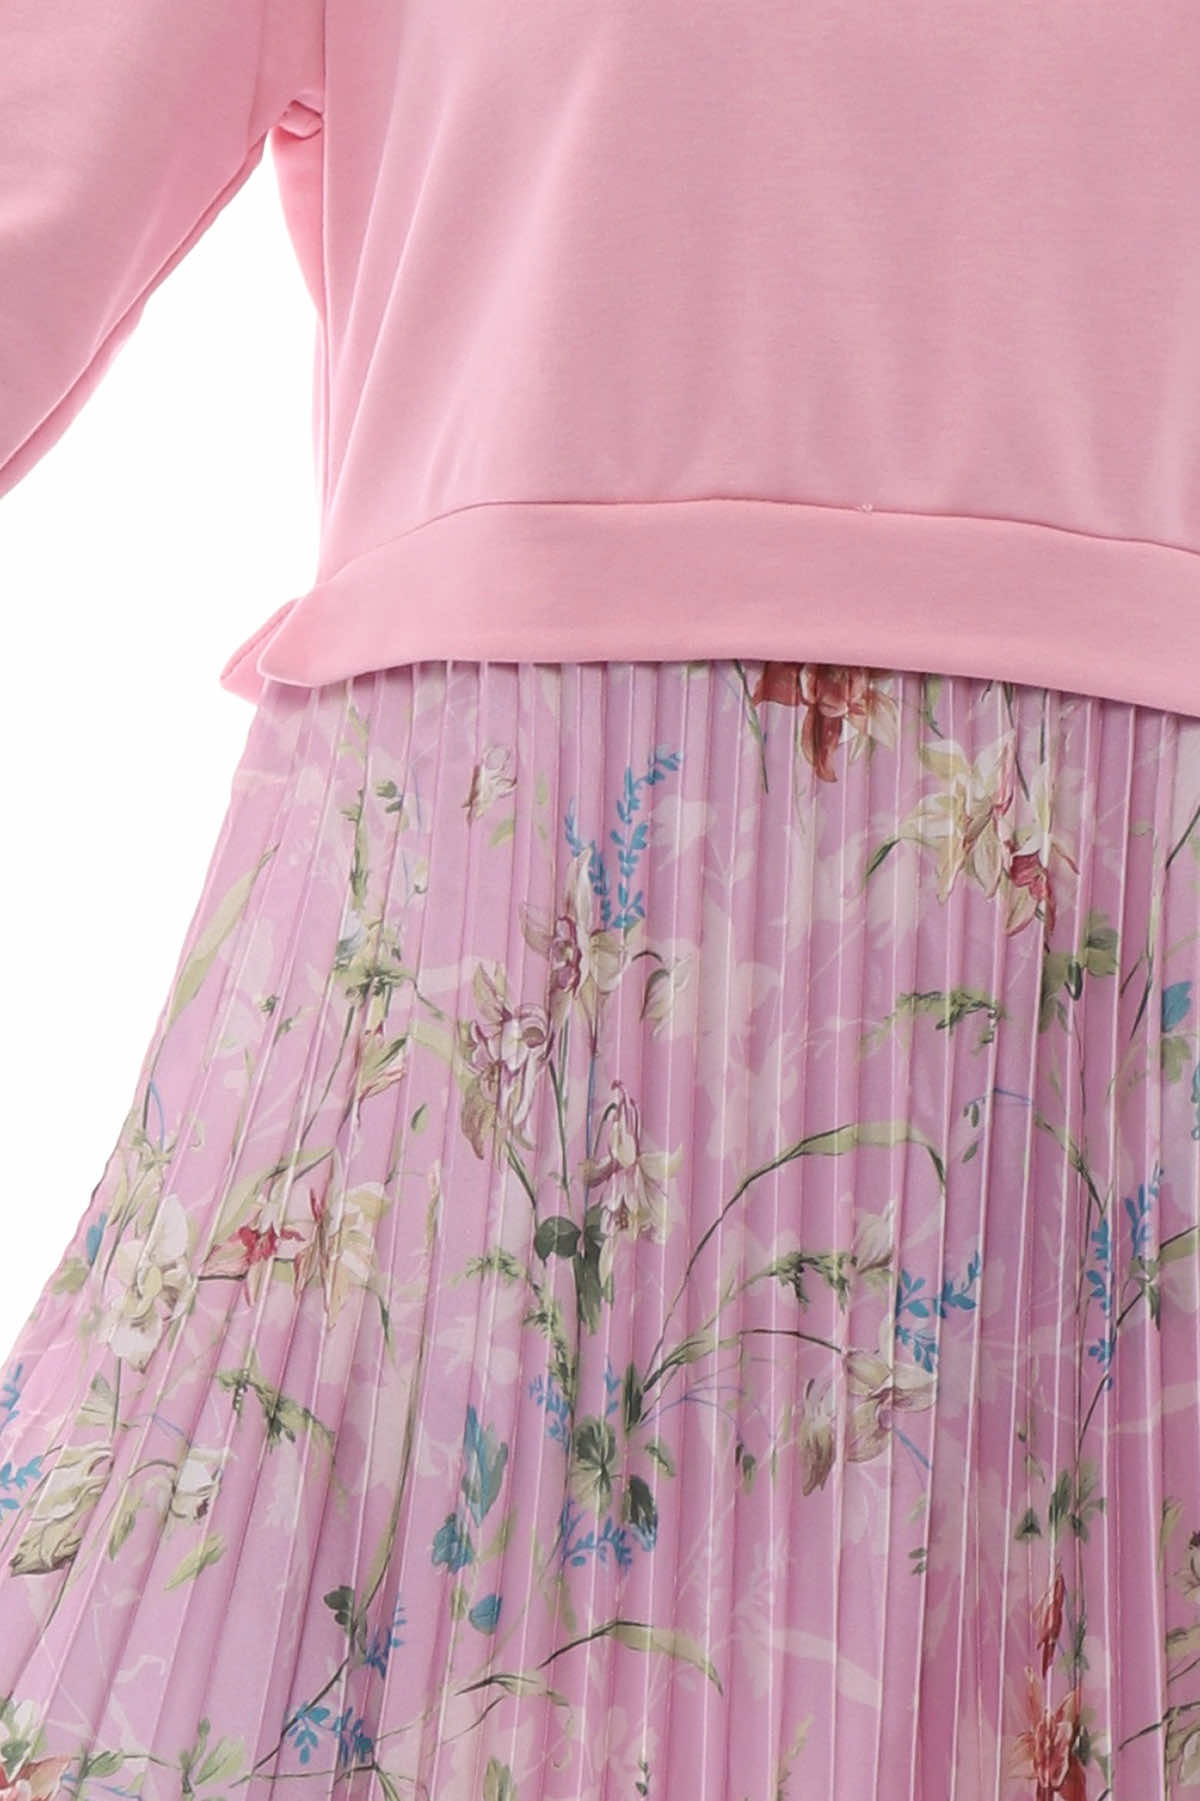 Kinzle Floral Pleated Jumper Dress Pink